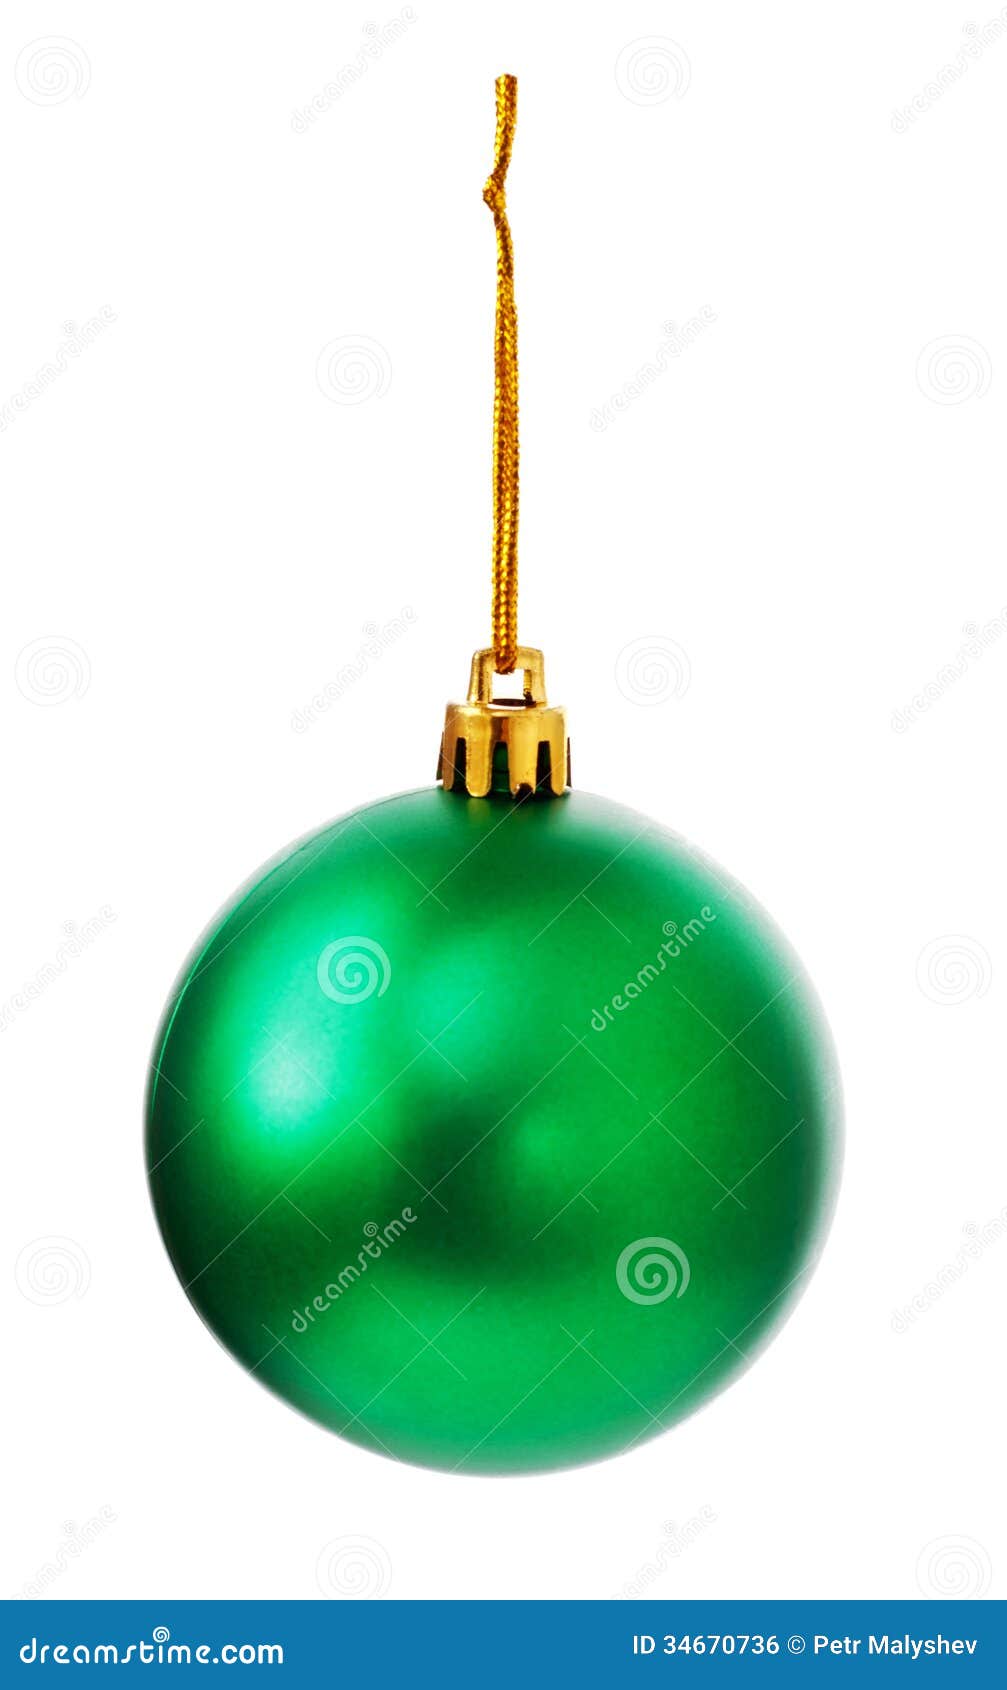 Green Christmas Ball stock photo. Image of decorative - 34670736